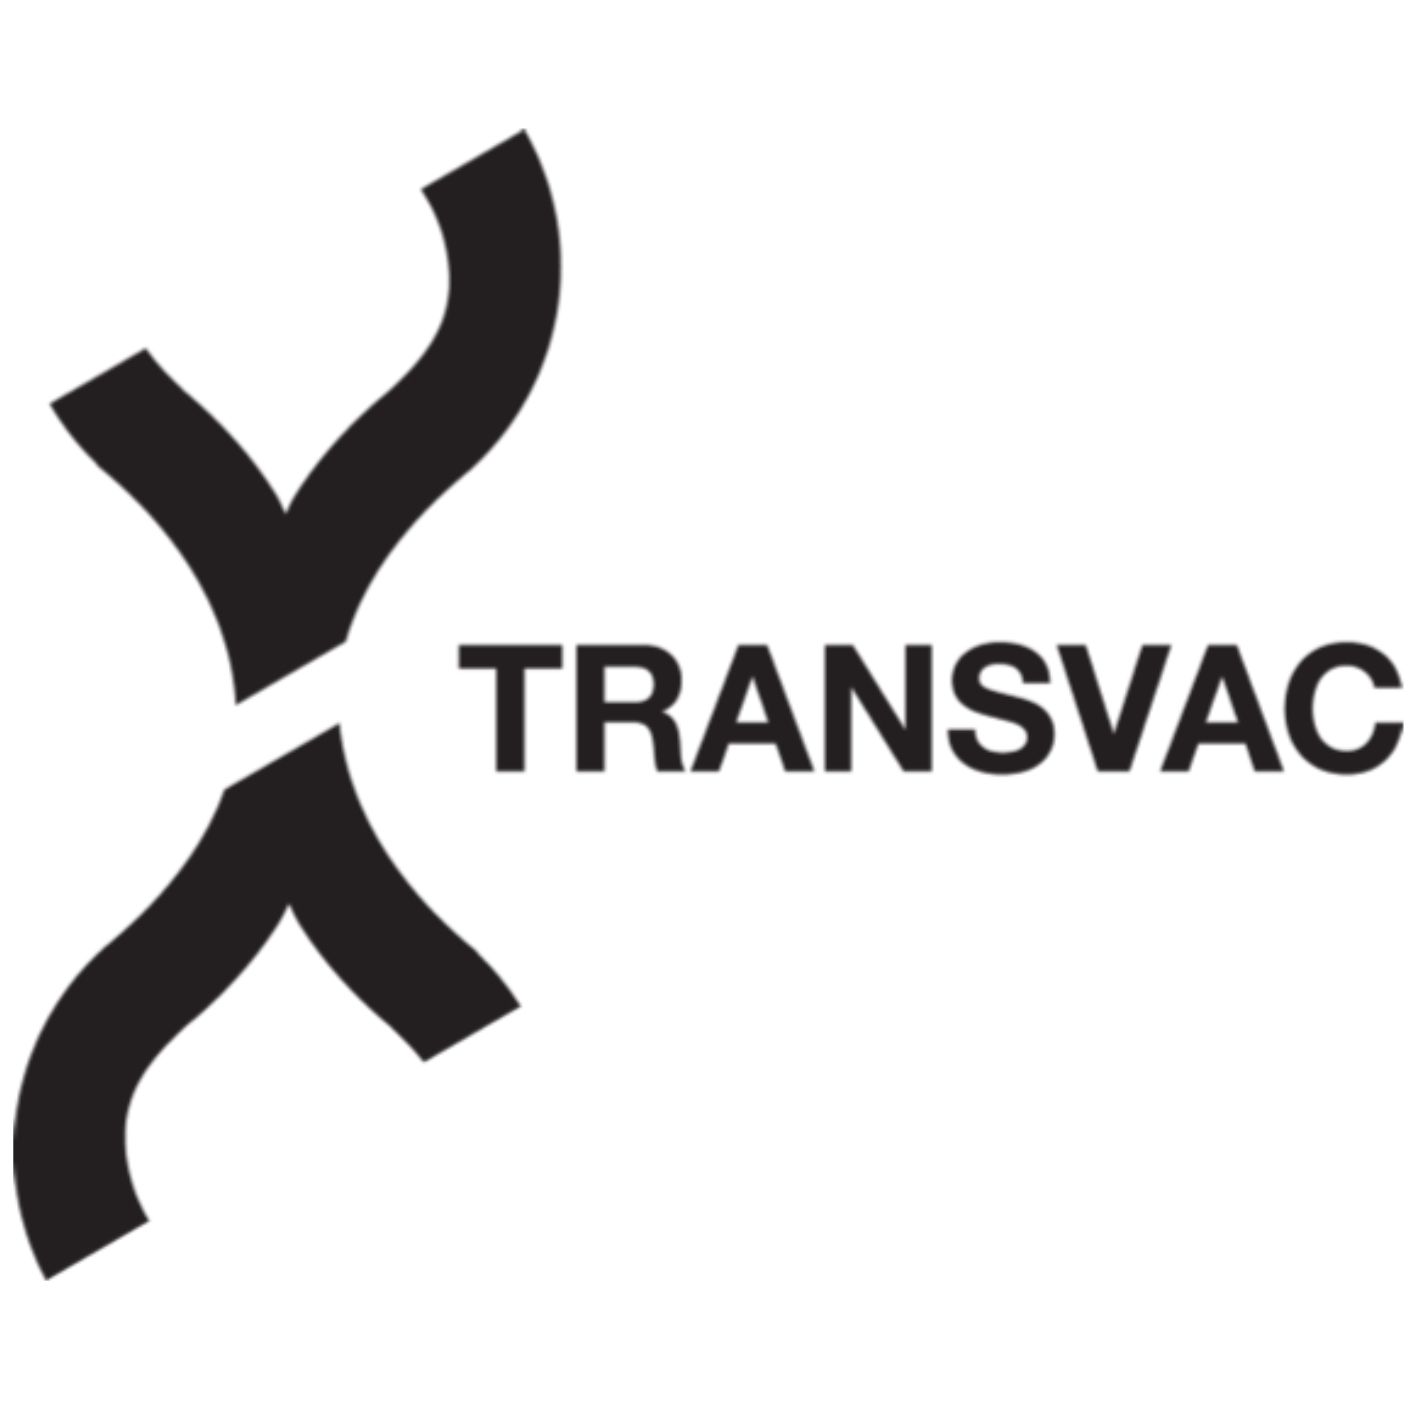 June 2020 - The TRANSVAC2 program